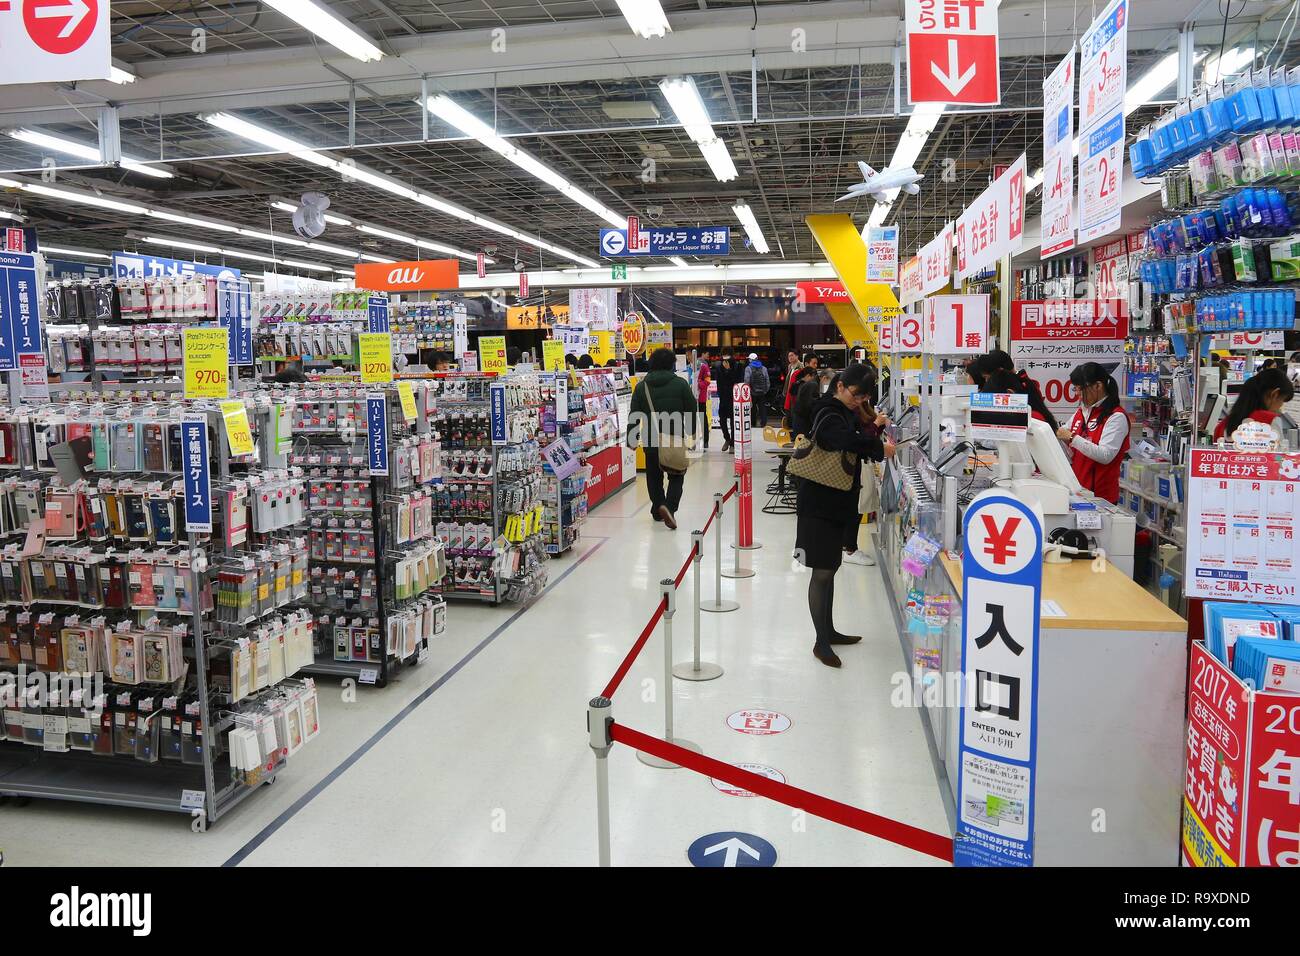 TOKYO, JAPAN - NOVEMBER 29, 2016: People visit electronics store in Tokyo, Japan. Retail sales amounted to137.6 trillion yen in Japan in 2012. Stock Photo